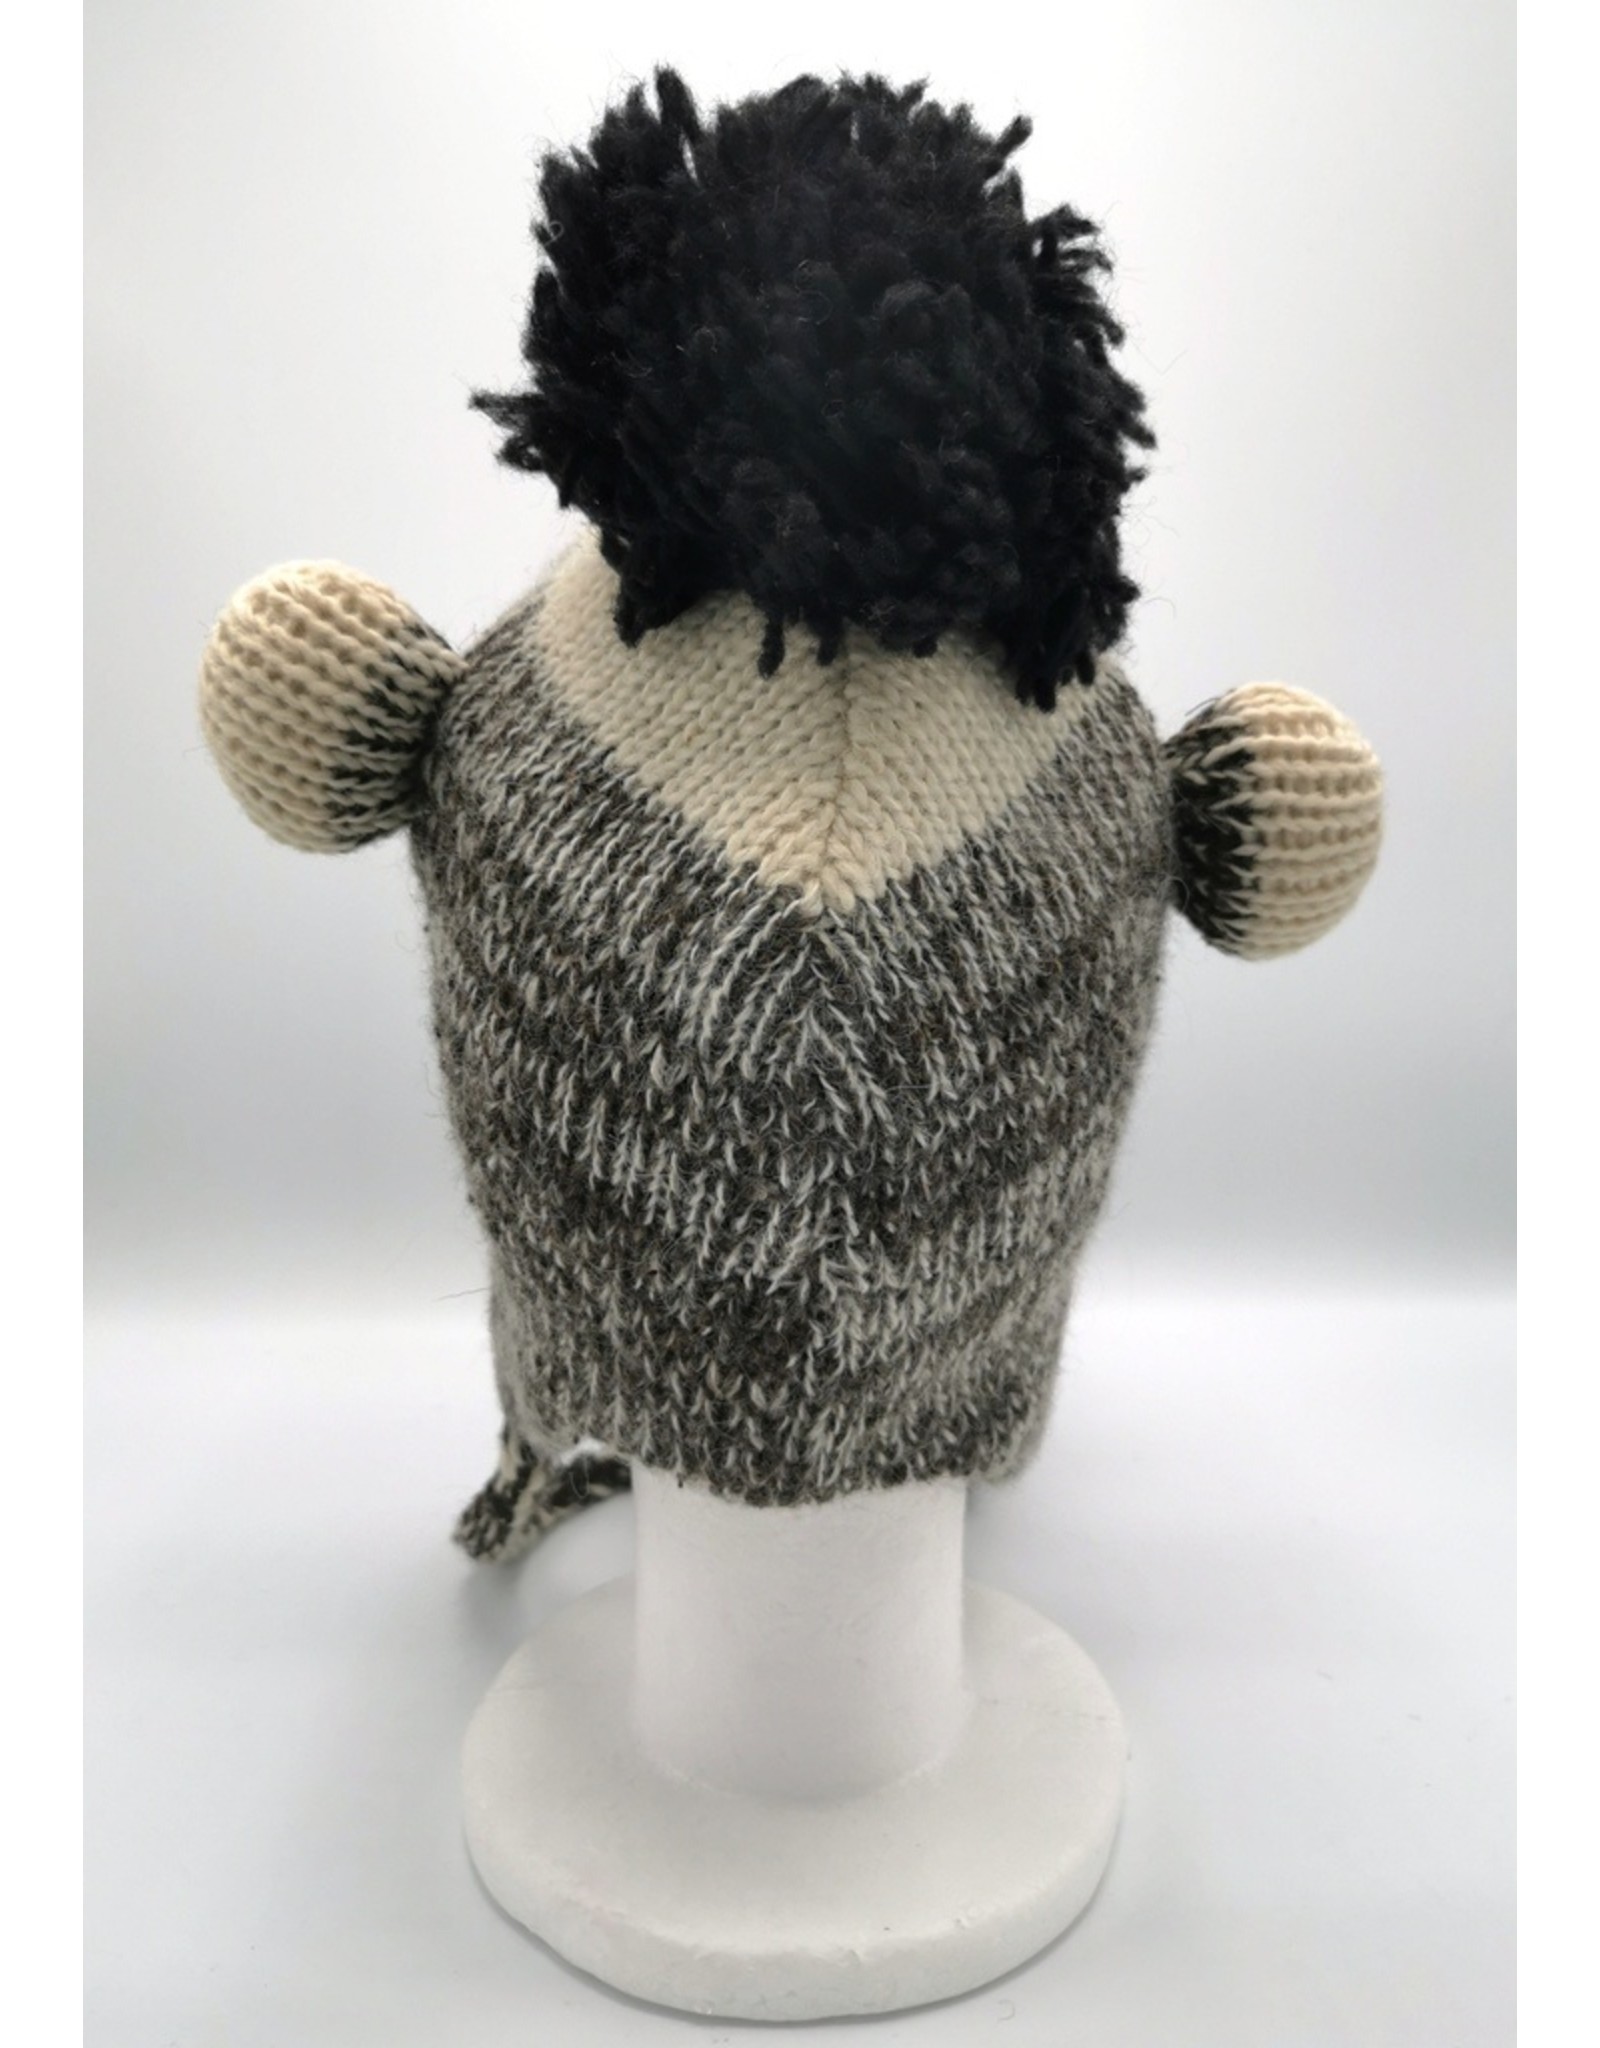 Trukado Miscellaneous - Knitted Hat Monkey head